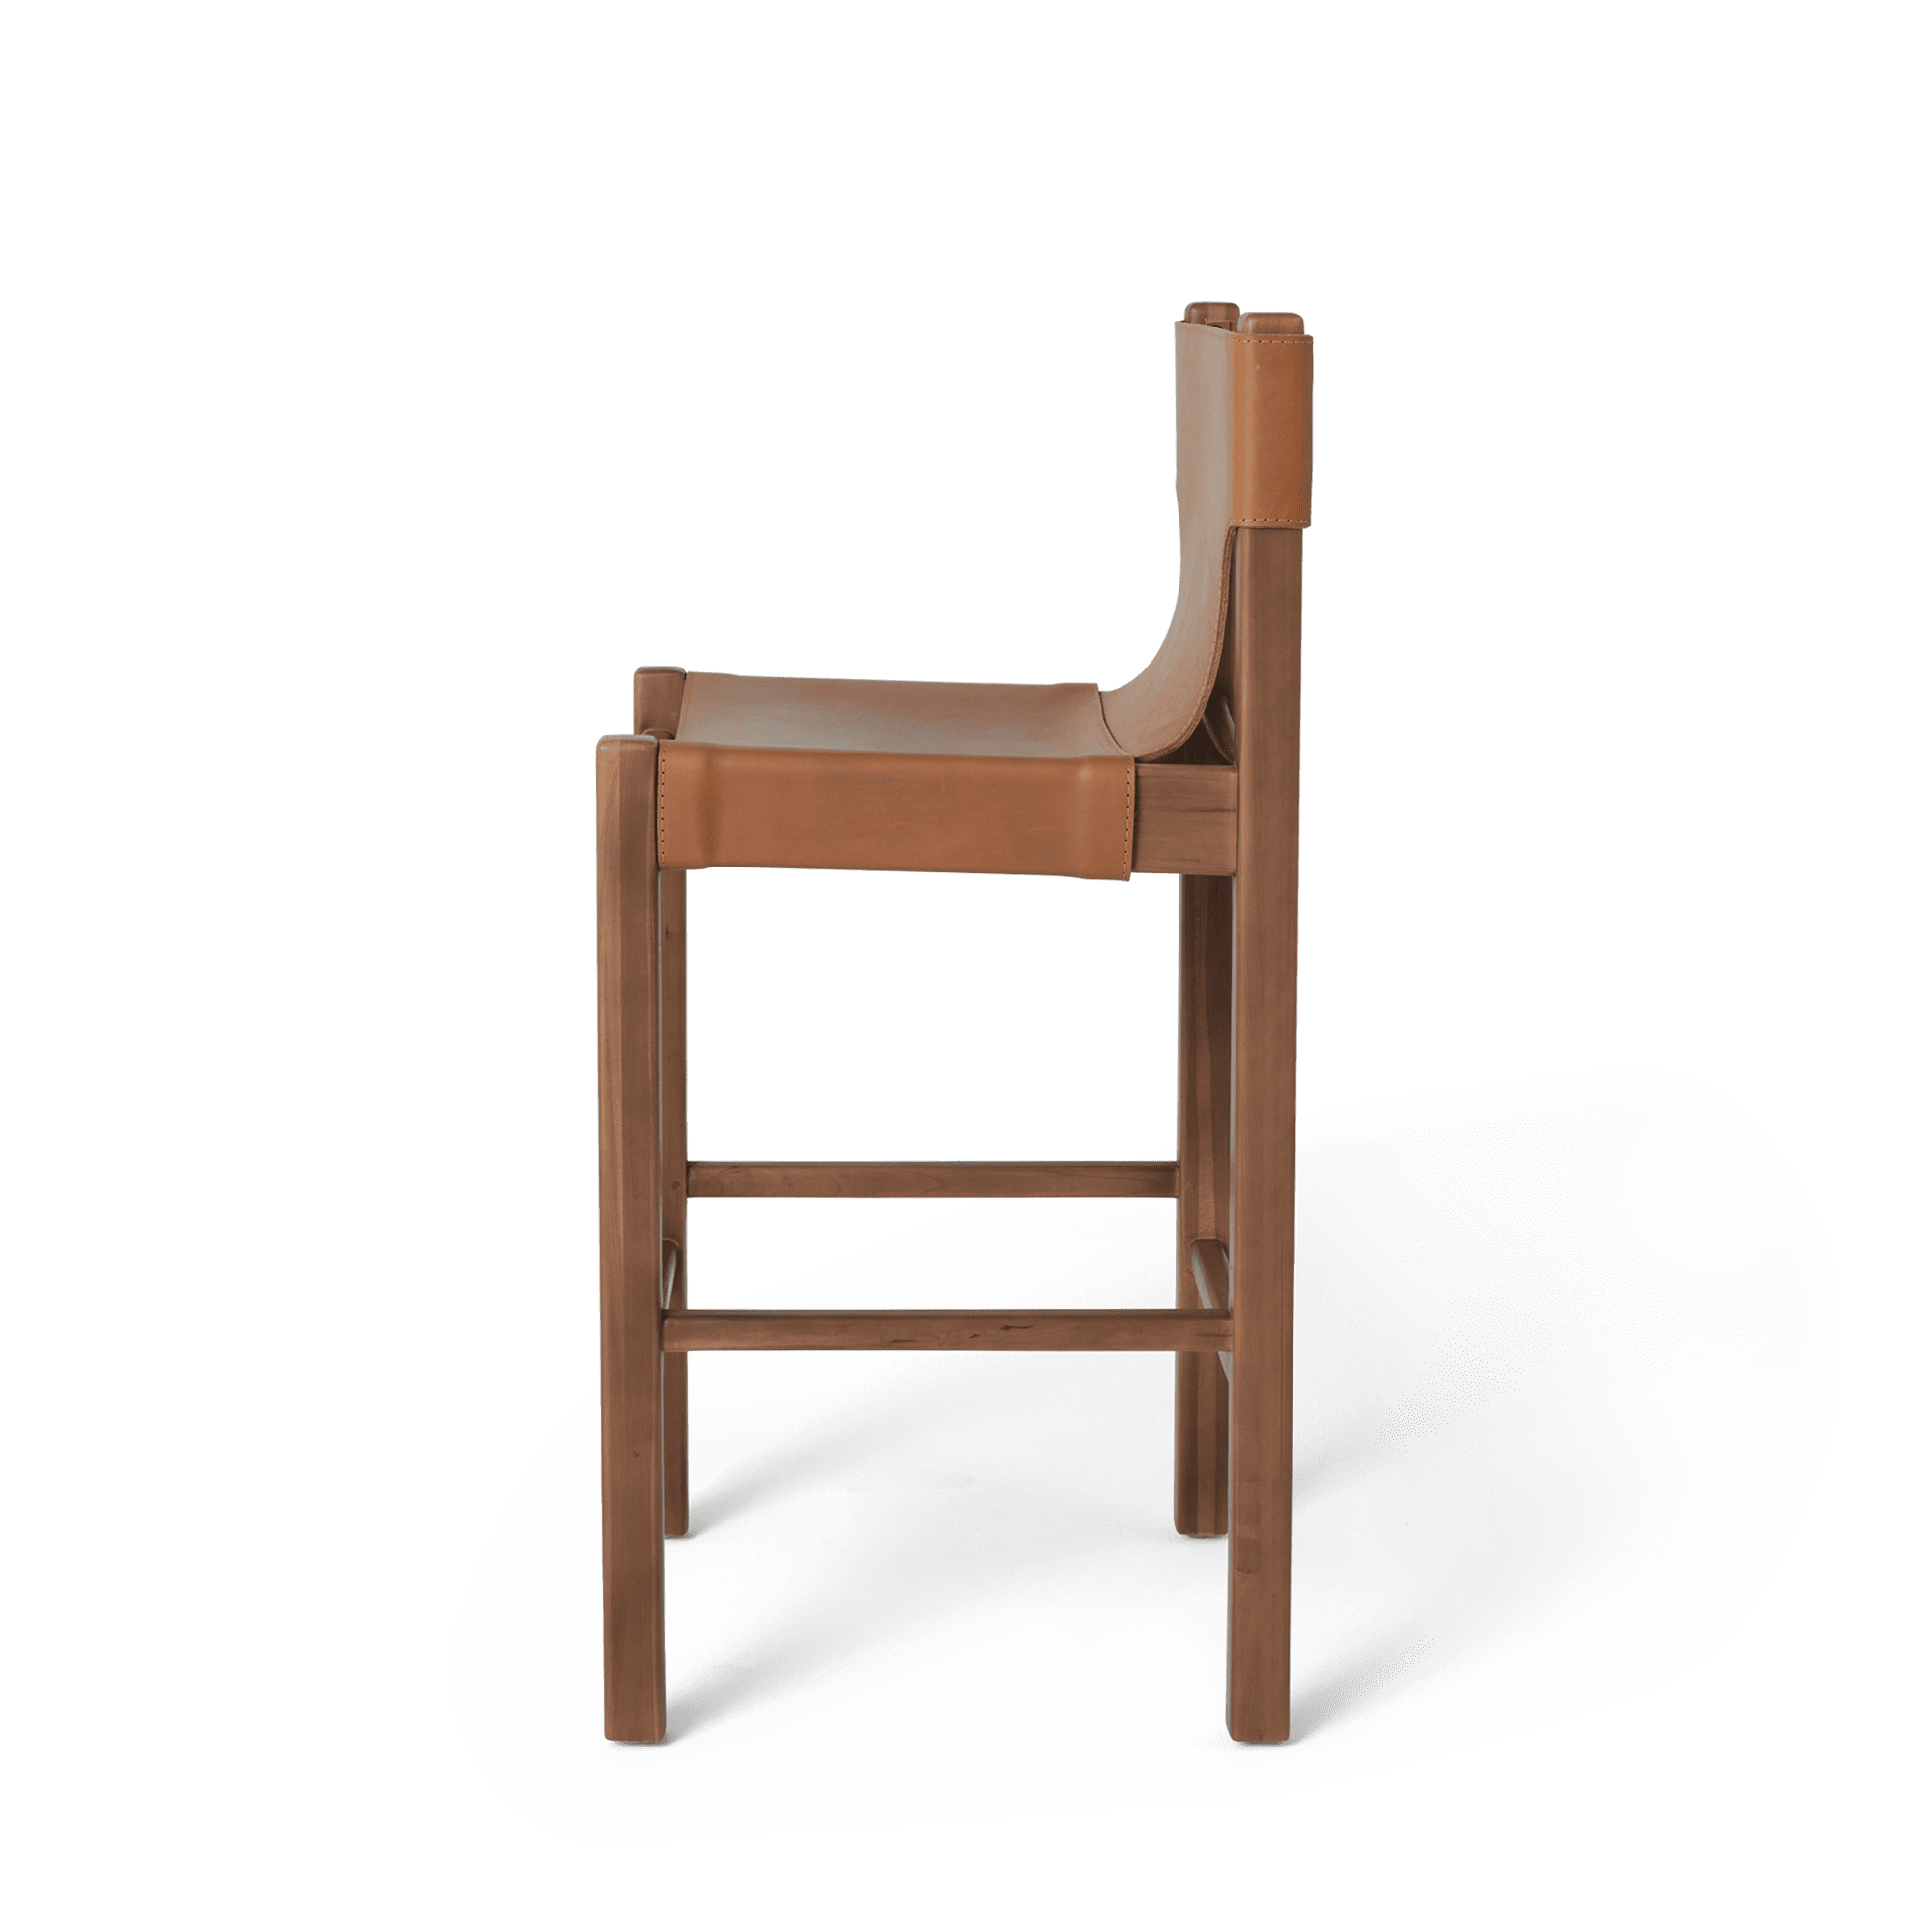 open box - henrik stool in cherry